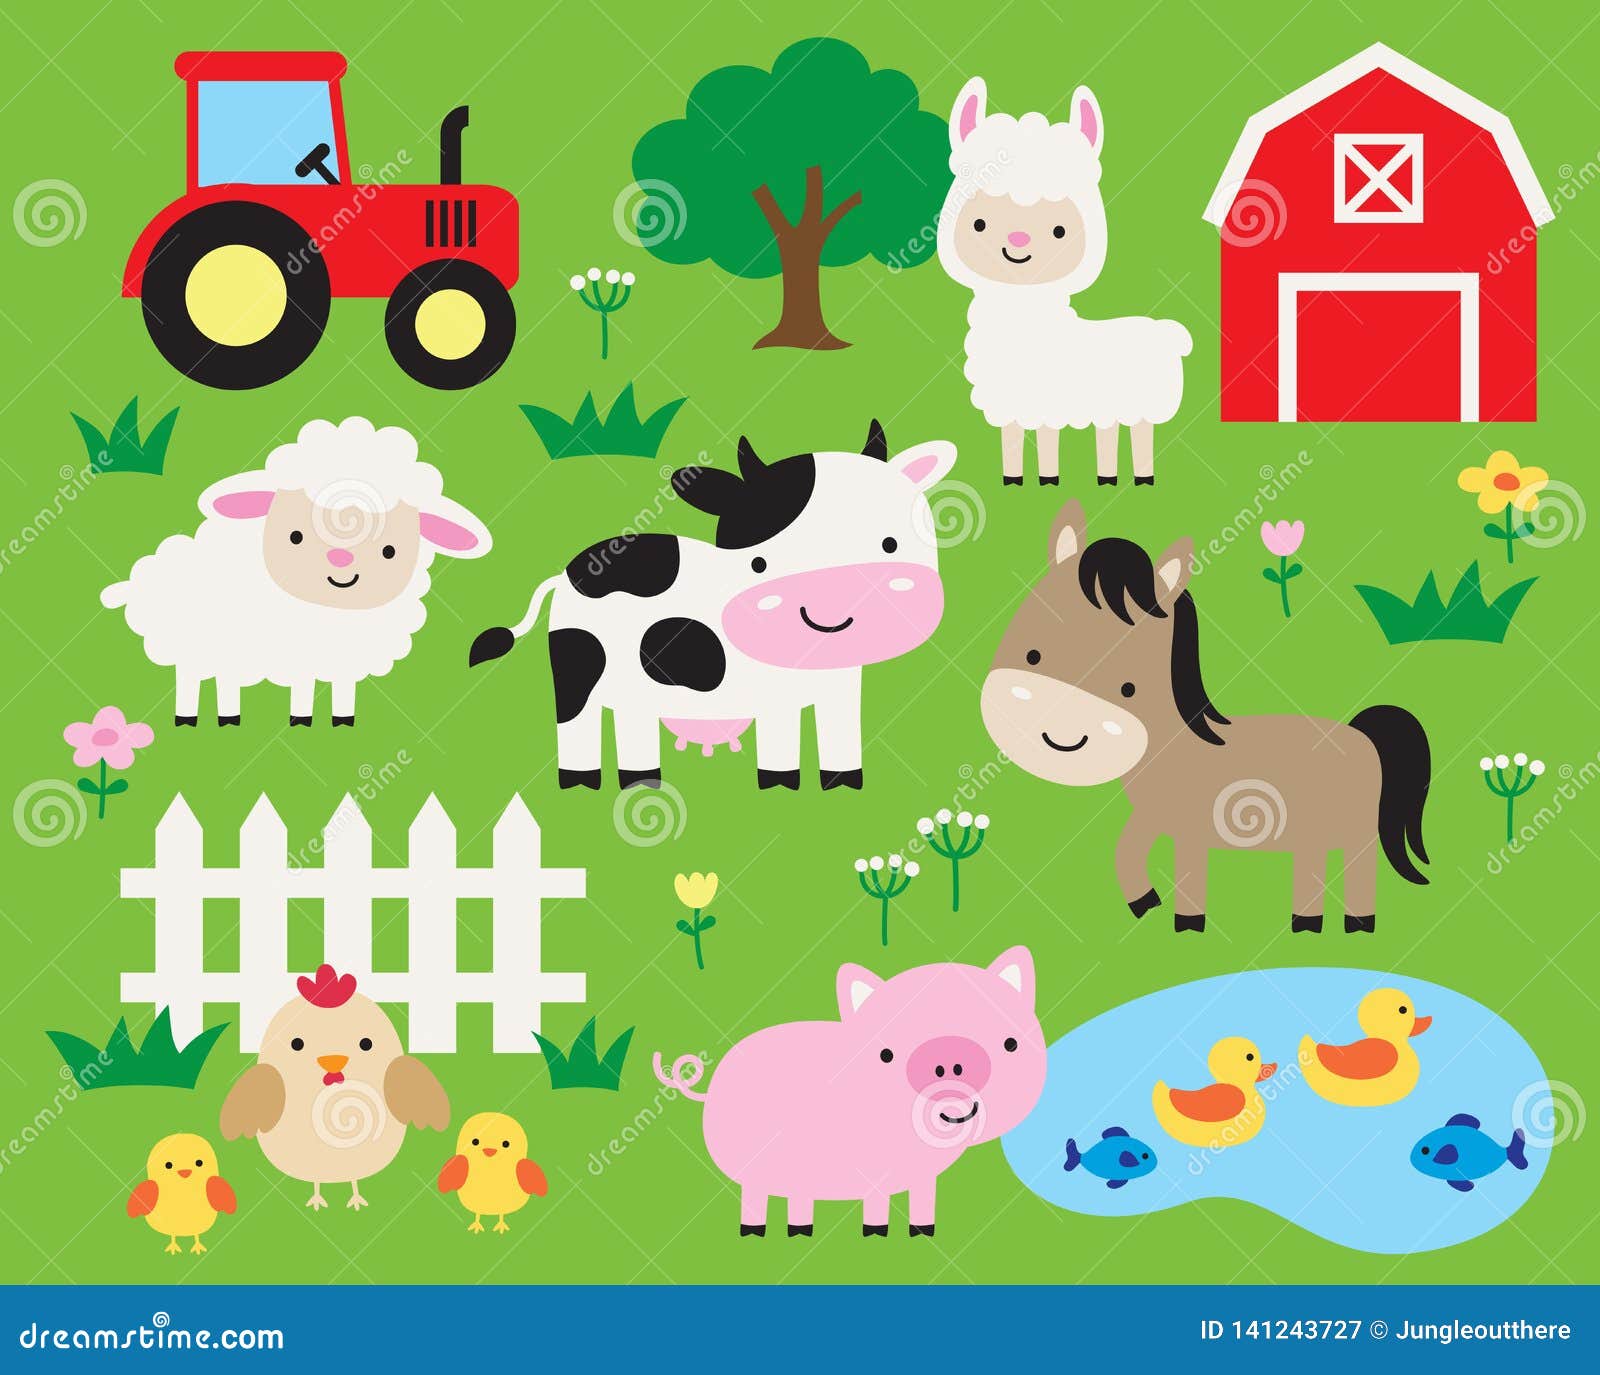 Cute Farm Animal Cartoon Vector Illustration Stock Vector - Illustration of  collection, cute: 141243727